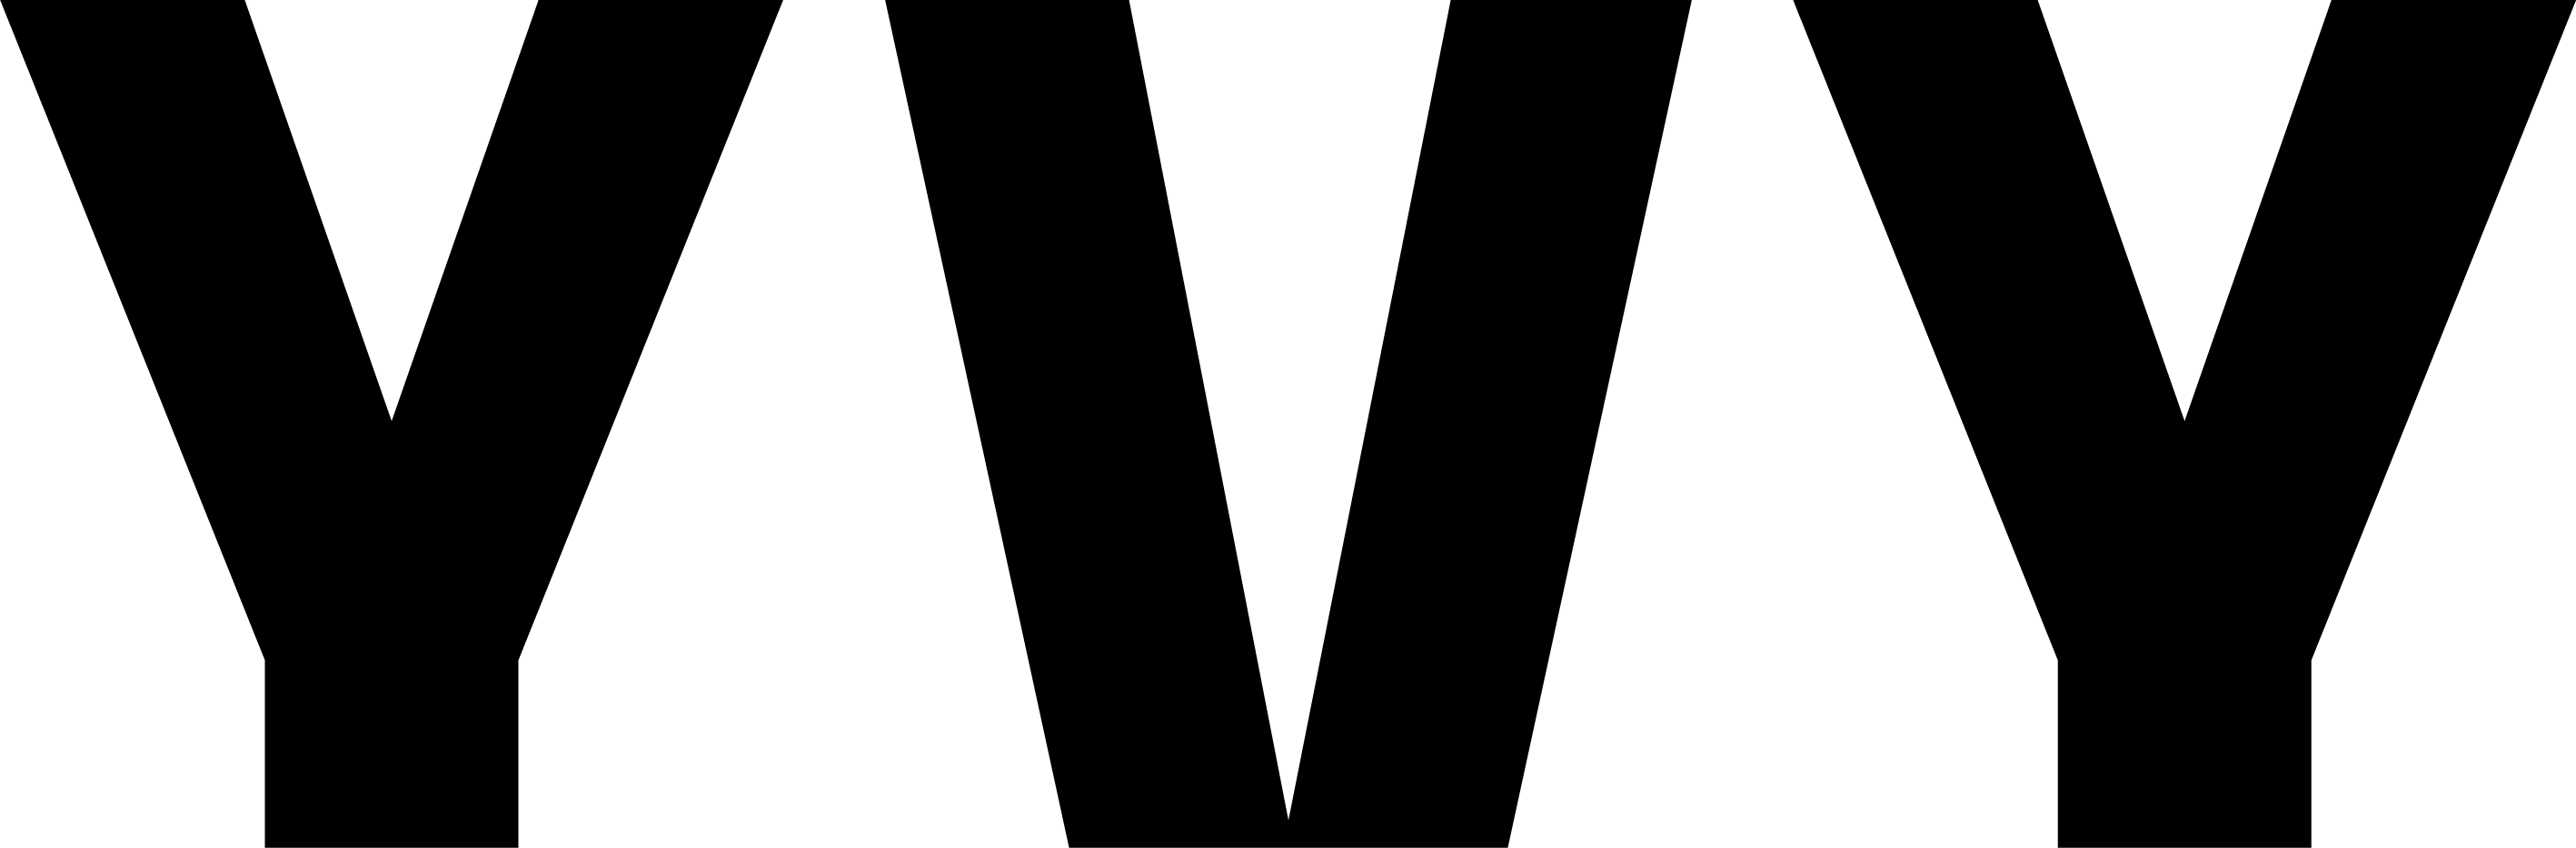 yvy leather brand logo